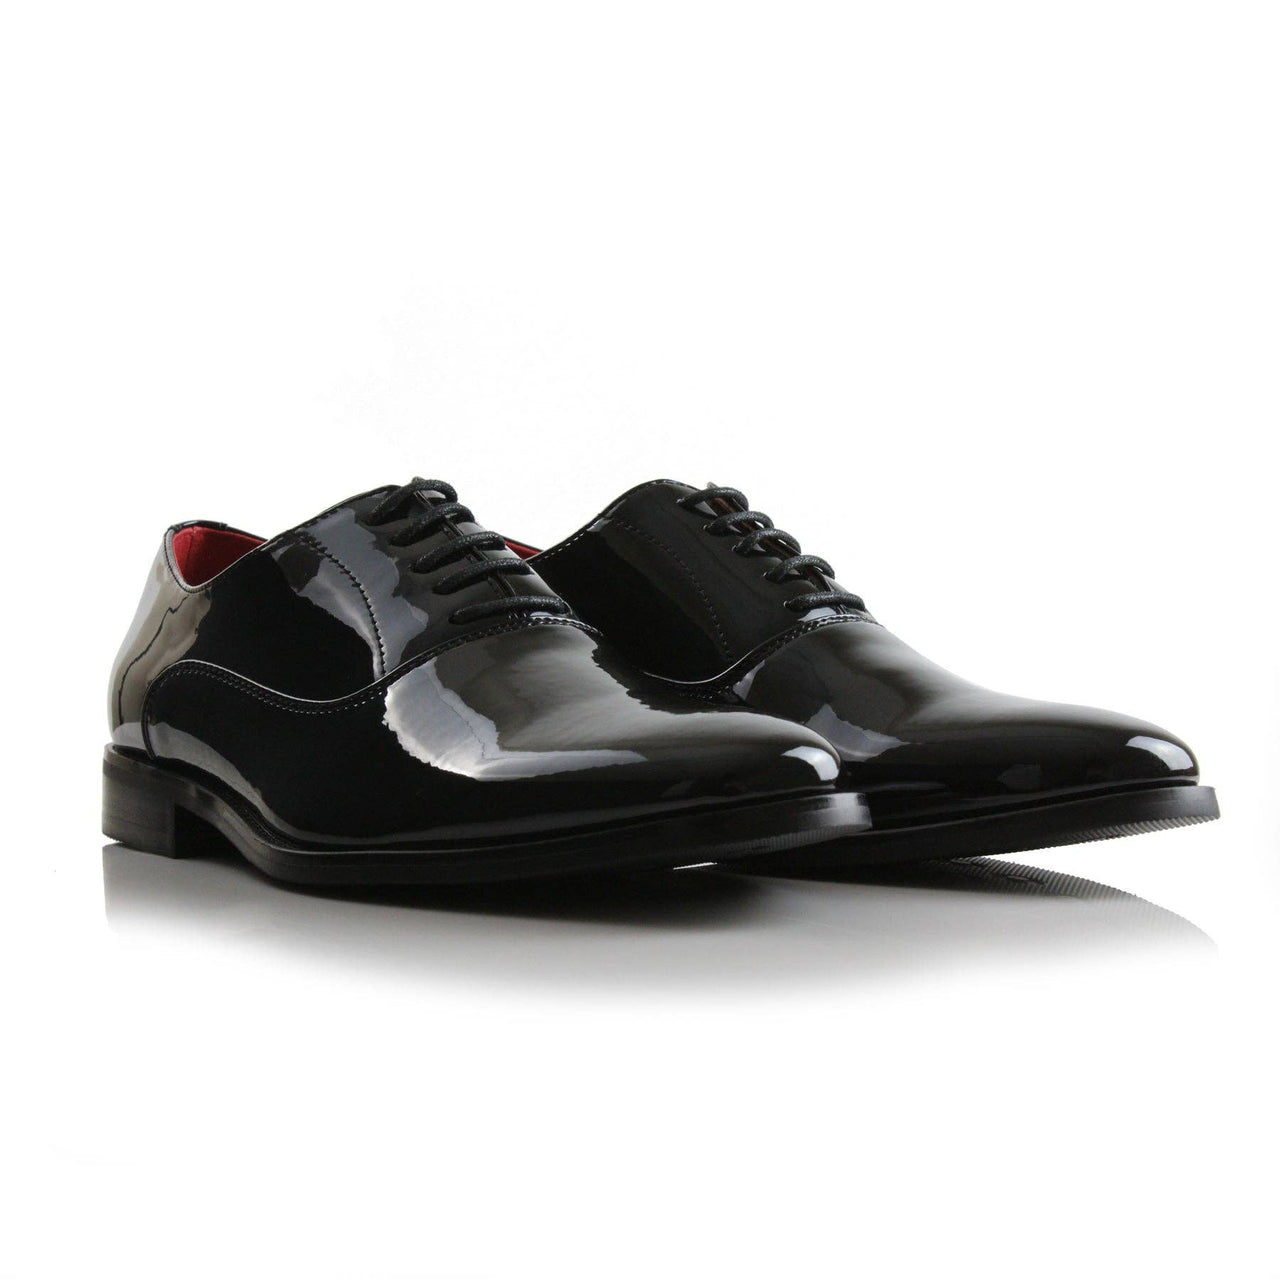 Tuxedo Shoes - Classic Black - Tomasso Black